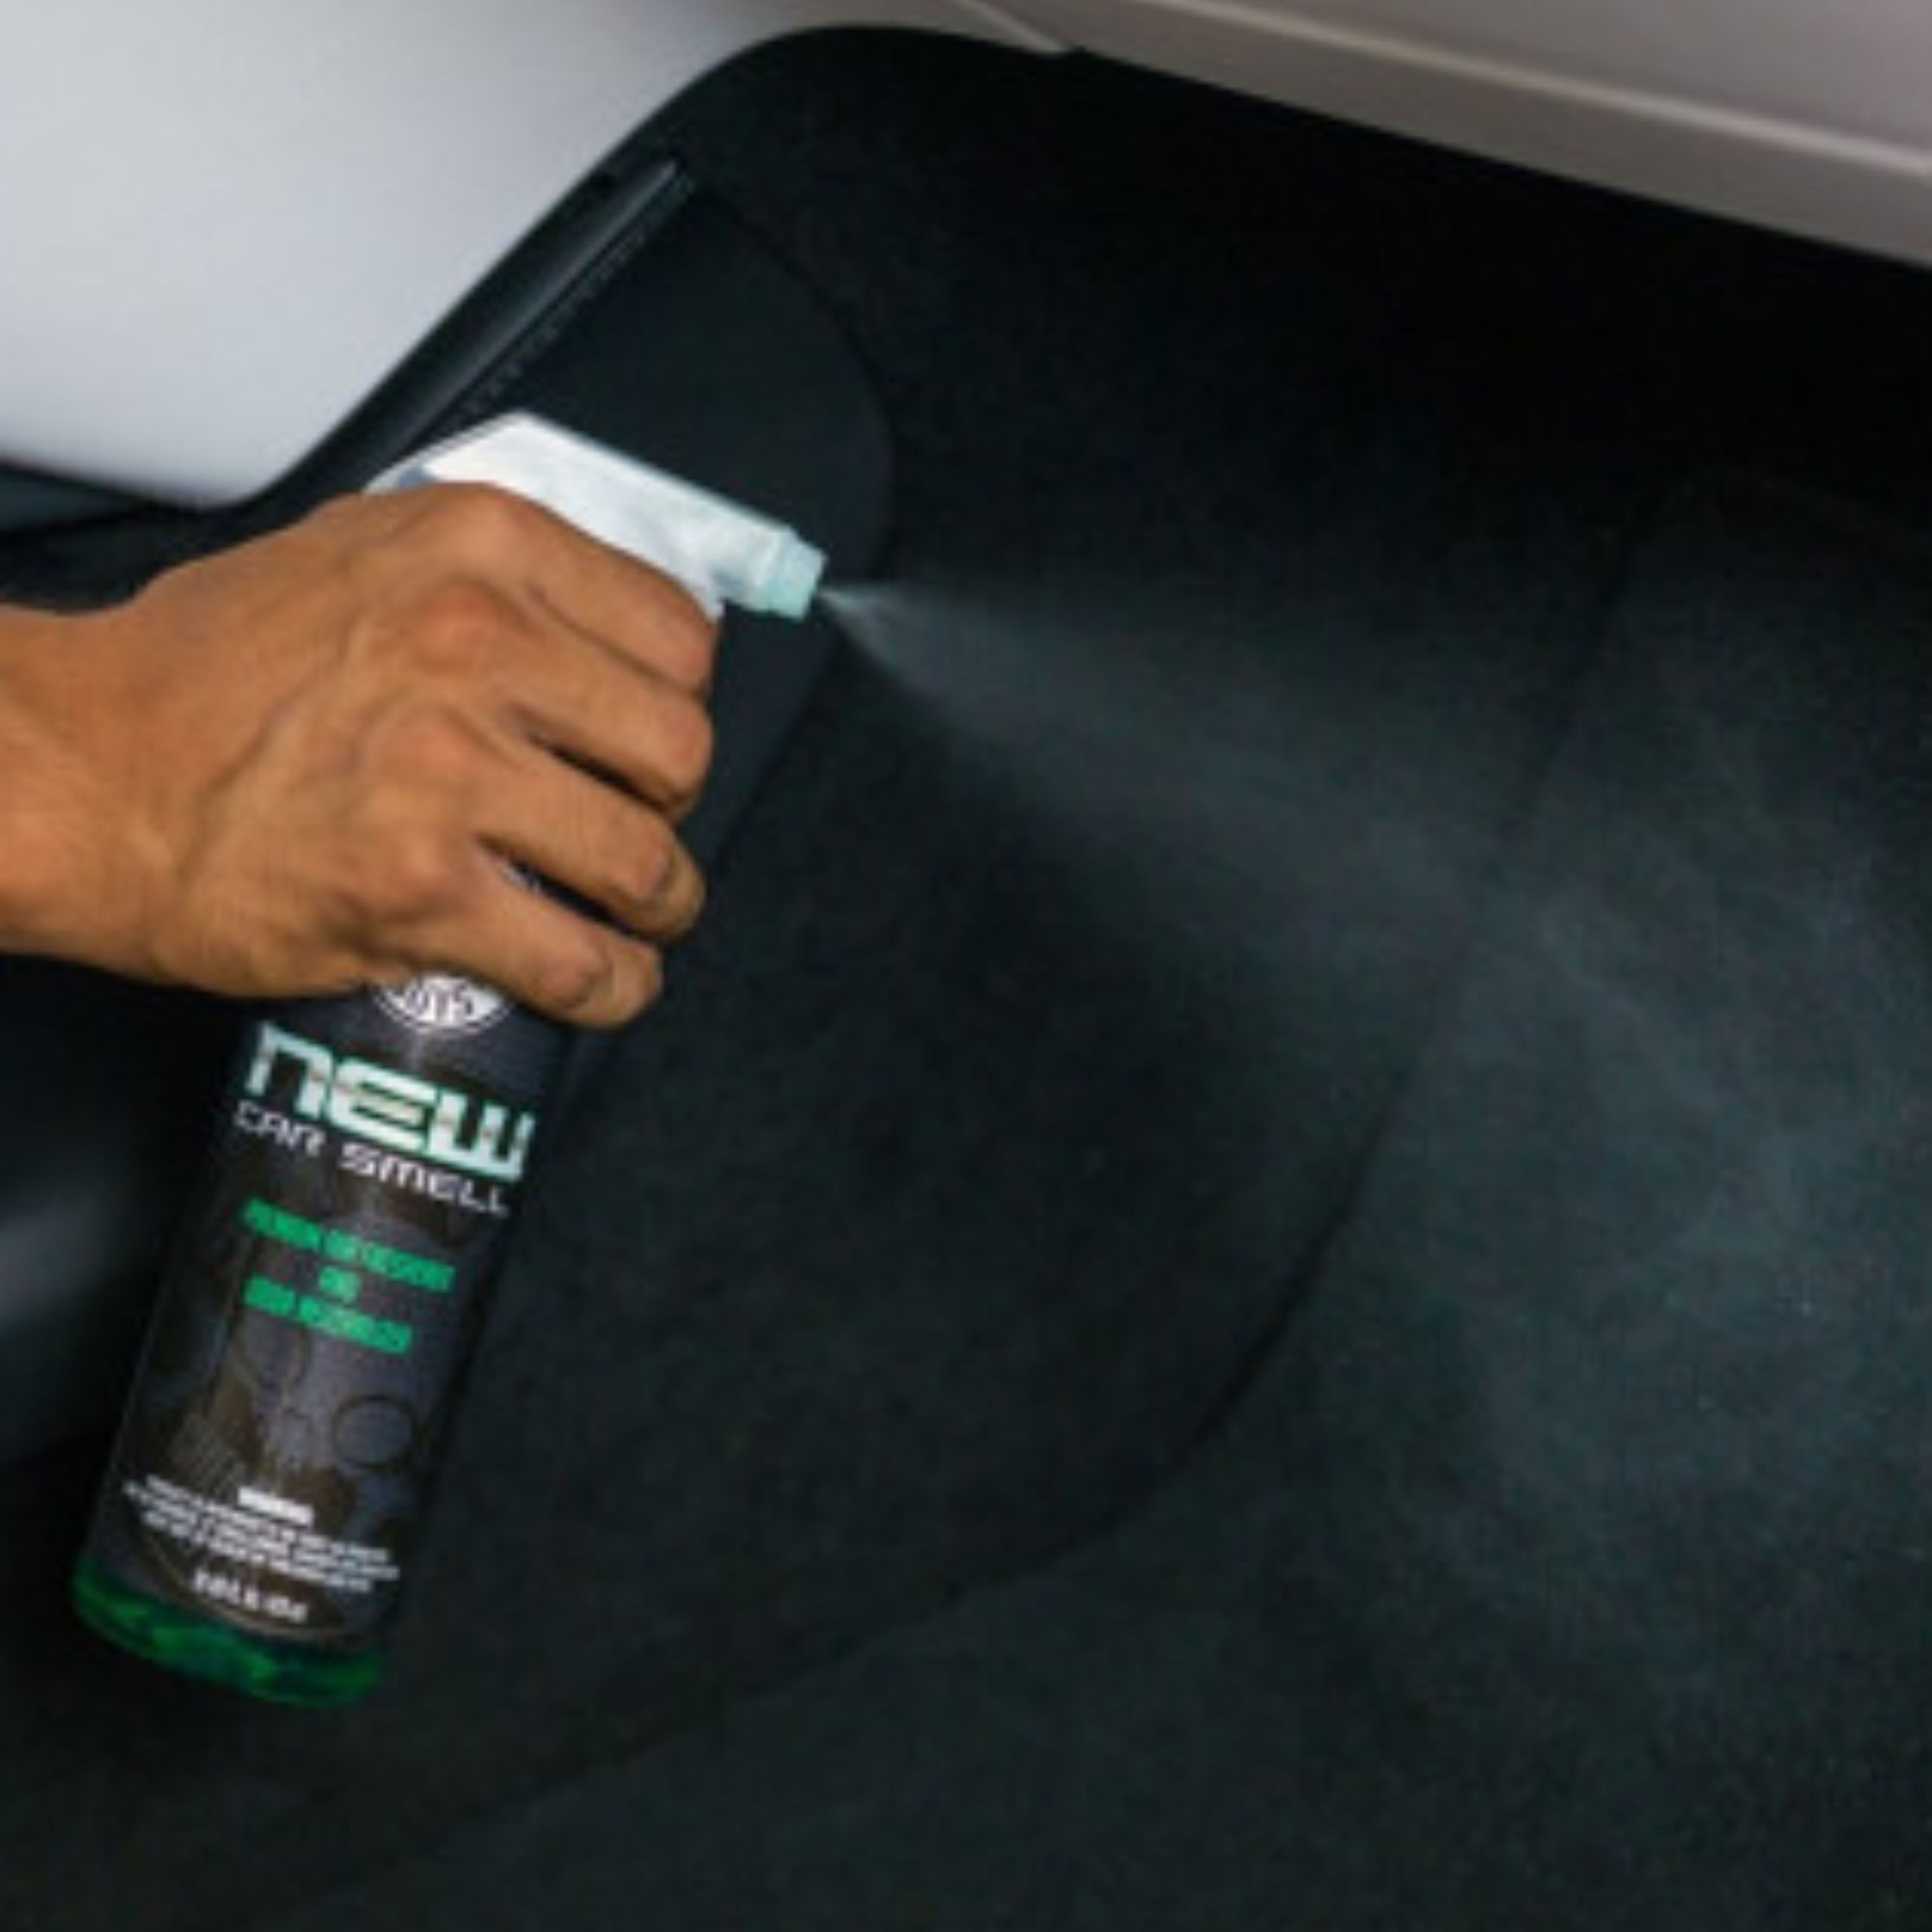 Chemical Guys Air Freshener - New Car Smell